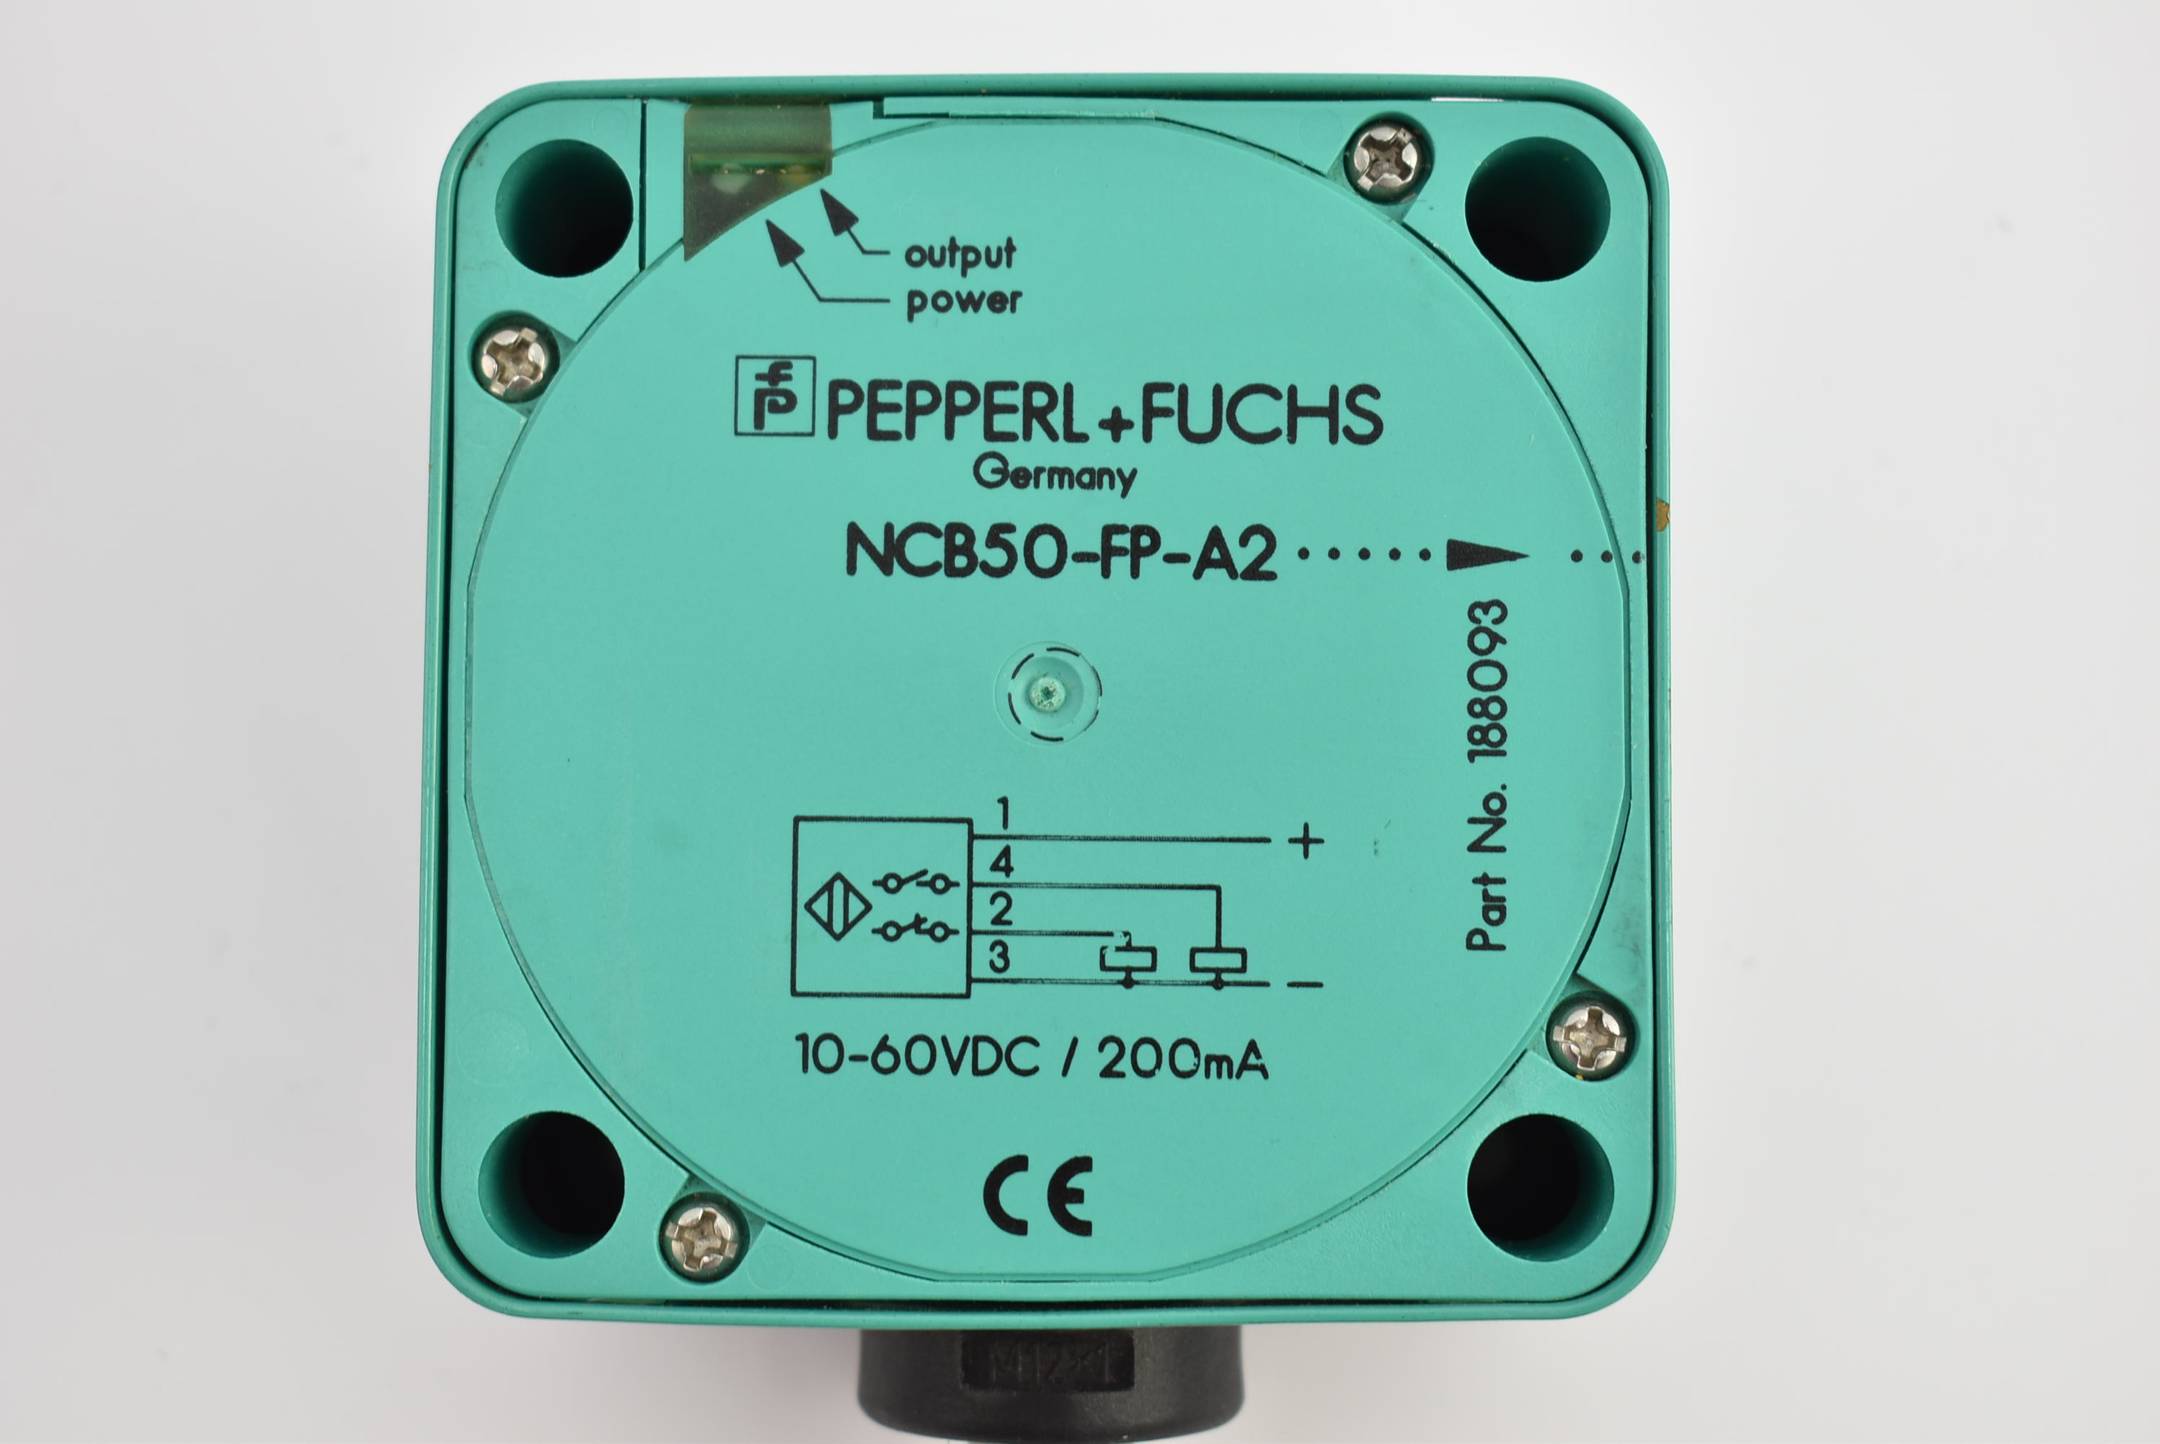 Pepperl+Fuchs NCB50-FP-A2 Part.No: 188093